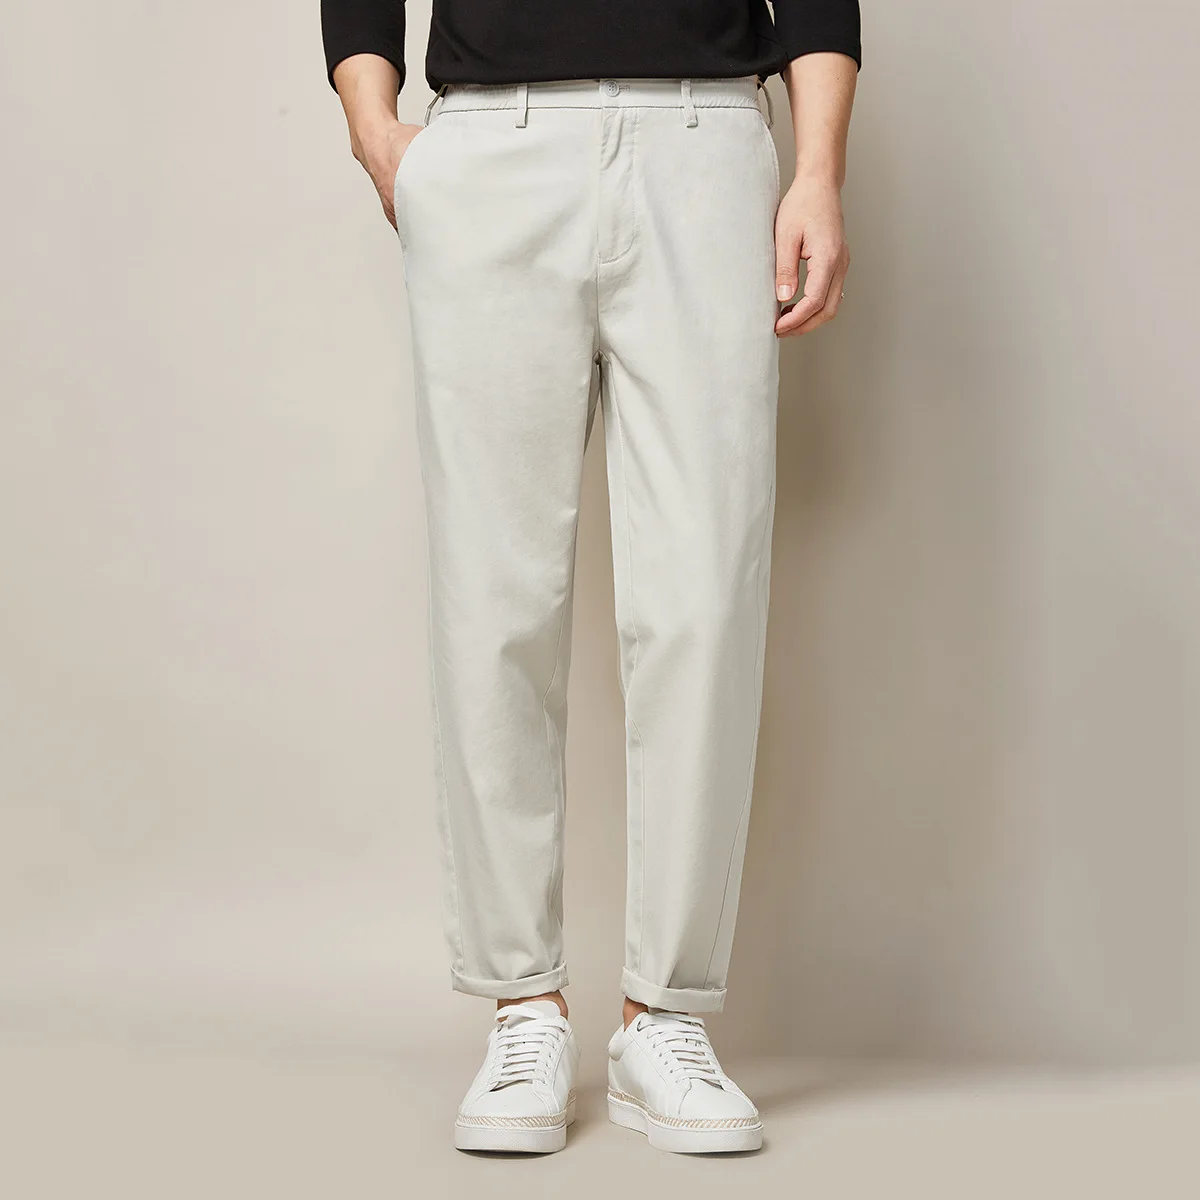 Fashion Casual Cotton Mens Ankle Length Pants New Male Pockets Black Sweatpants